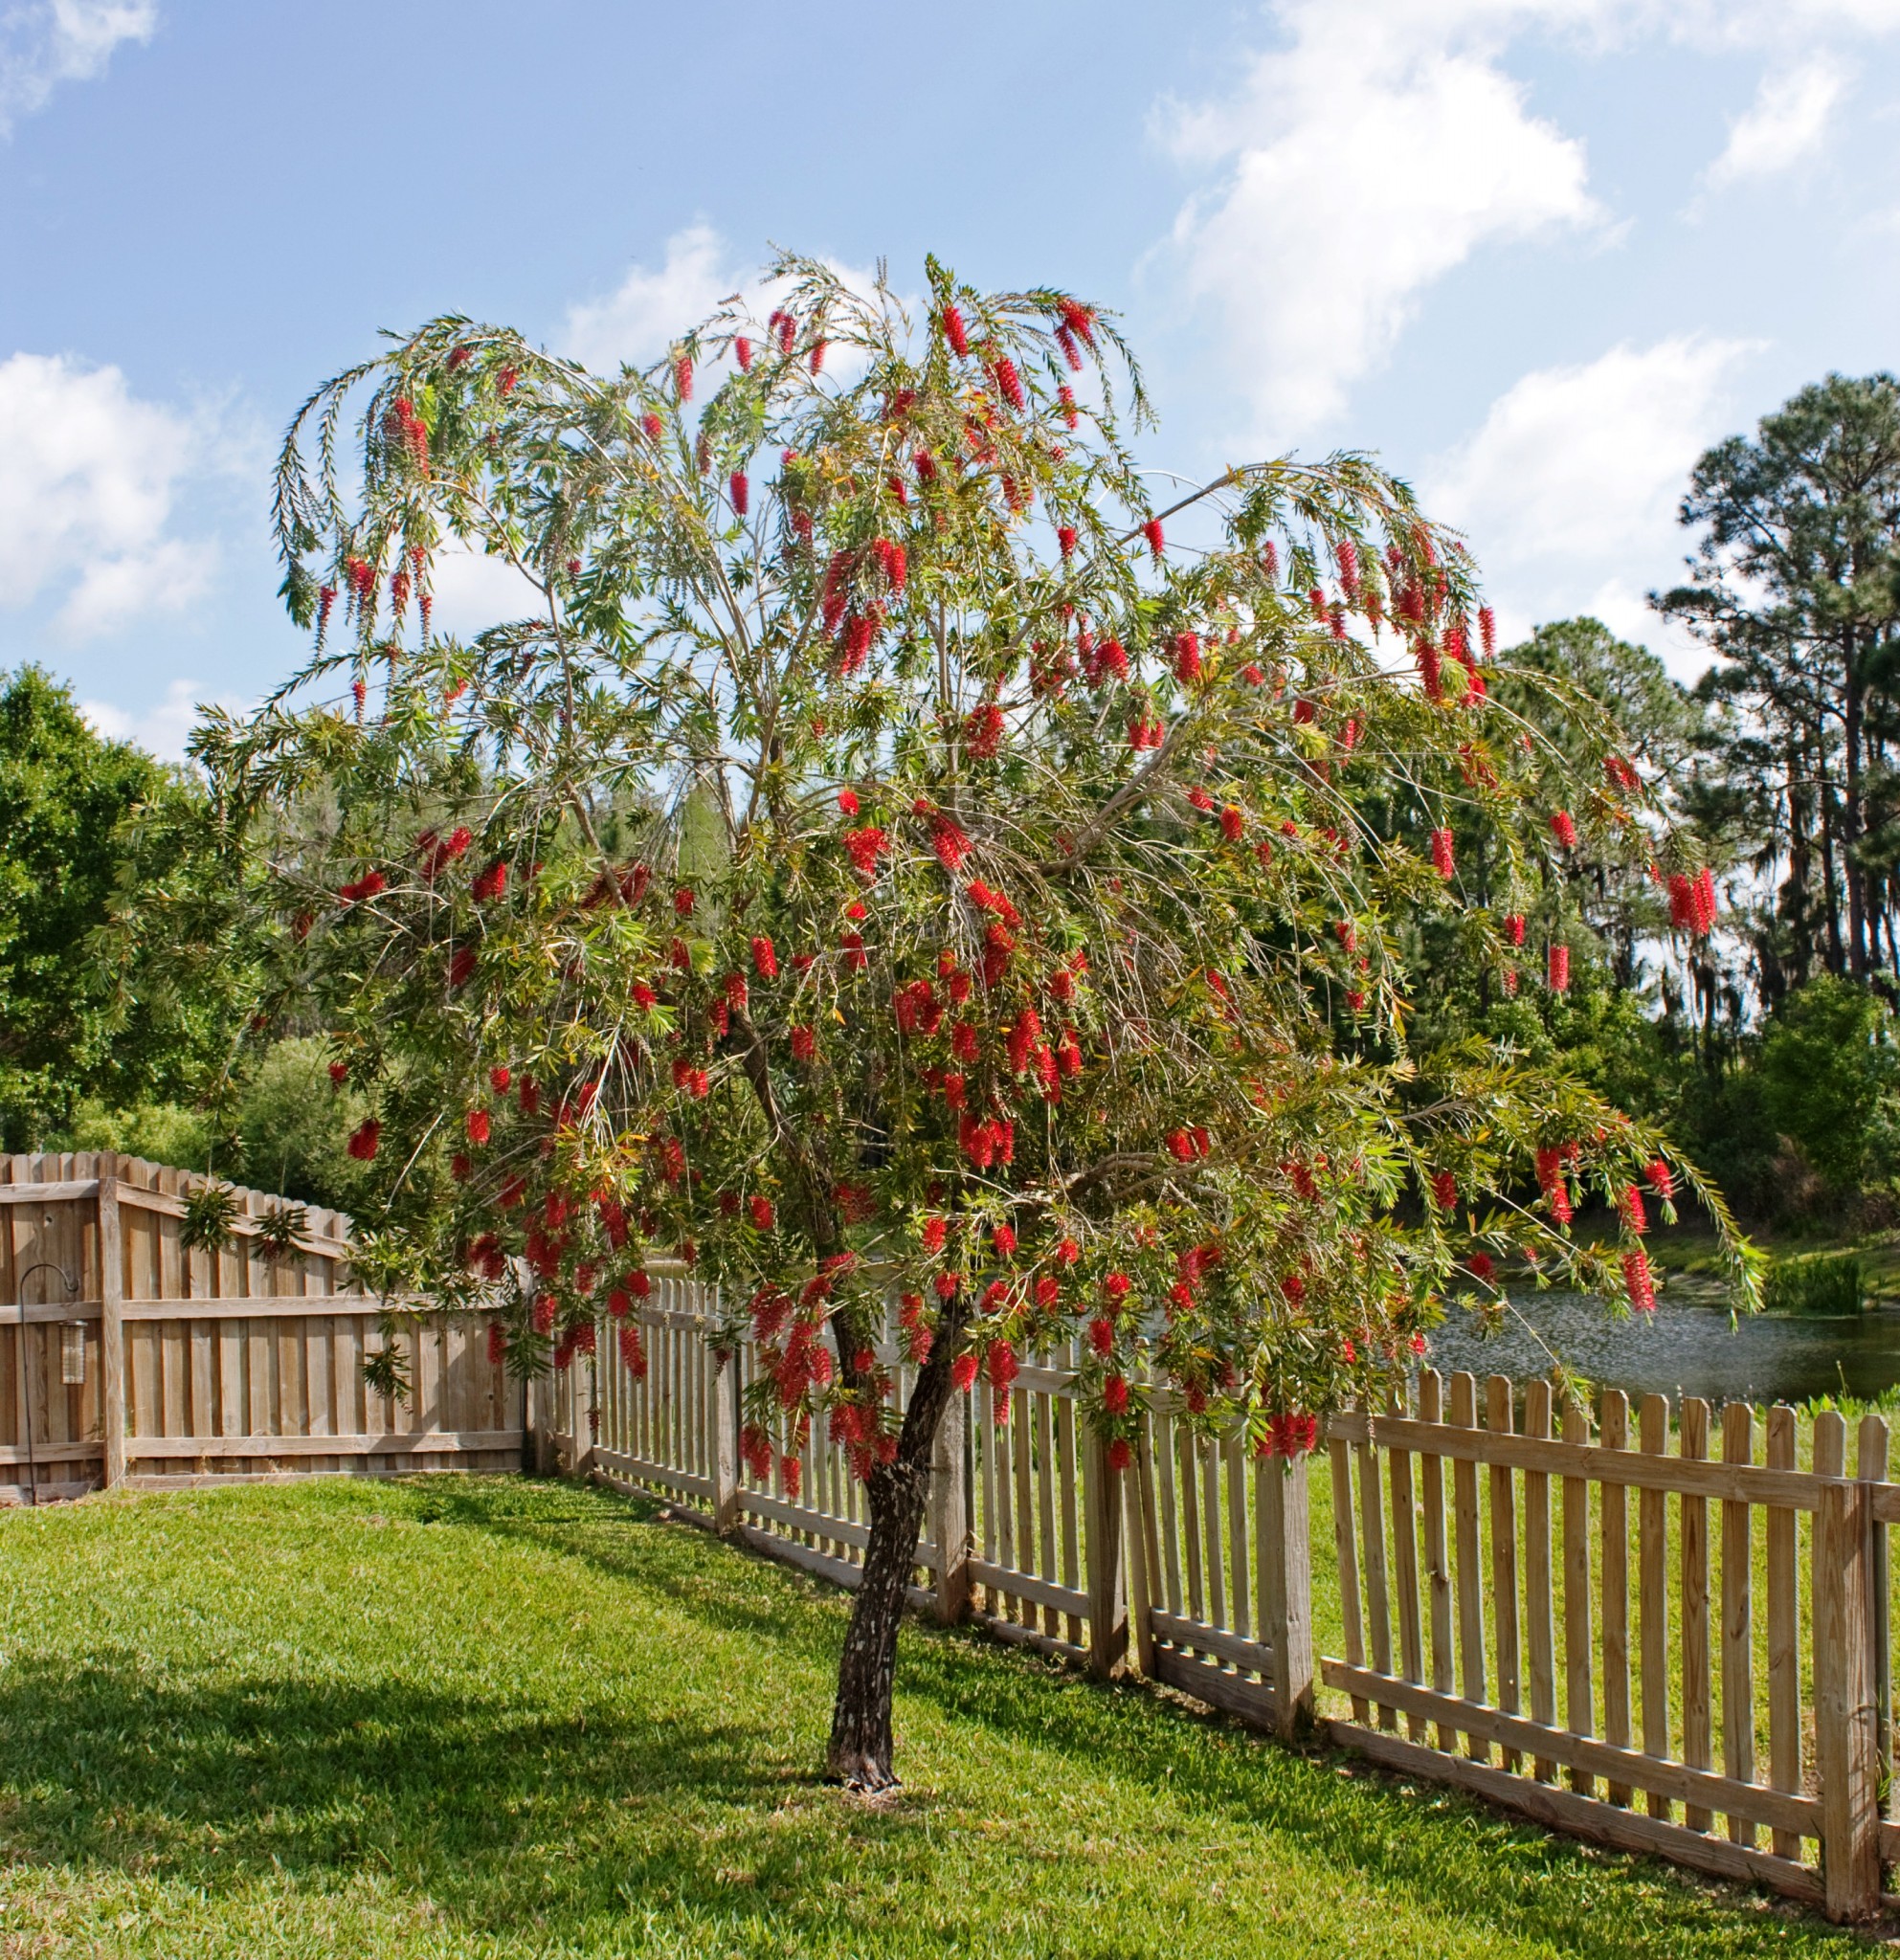 https://artistree.com/wp-content/uploads/2014/09/Red_bottlebrush_tree_in_Florida_crop.jpg